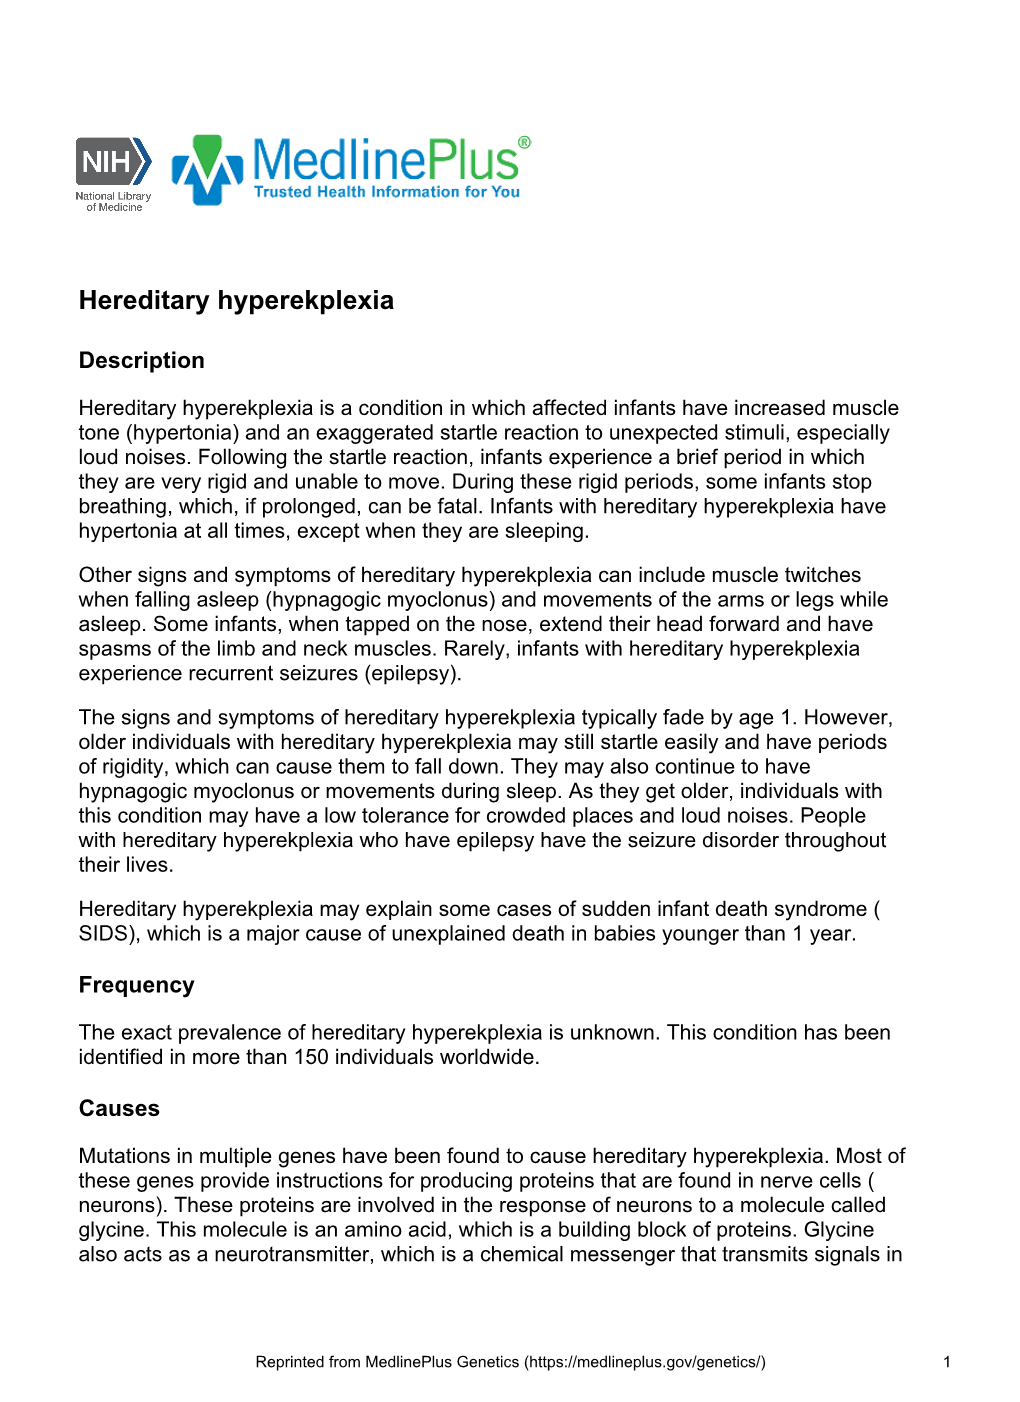 Hereditary Hyperekplexia